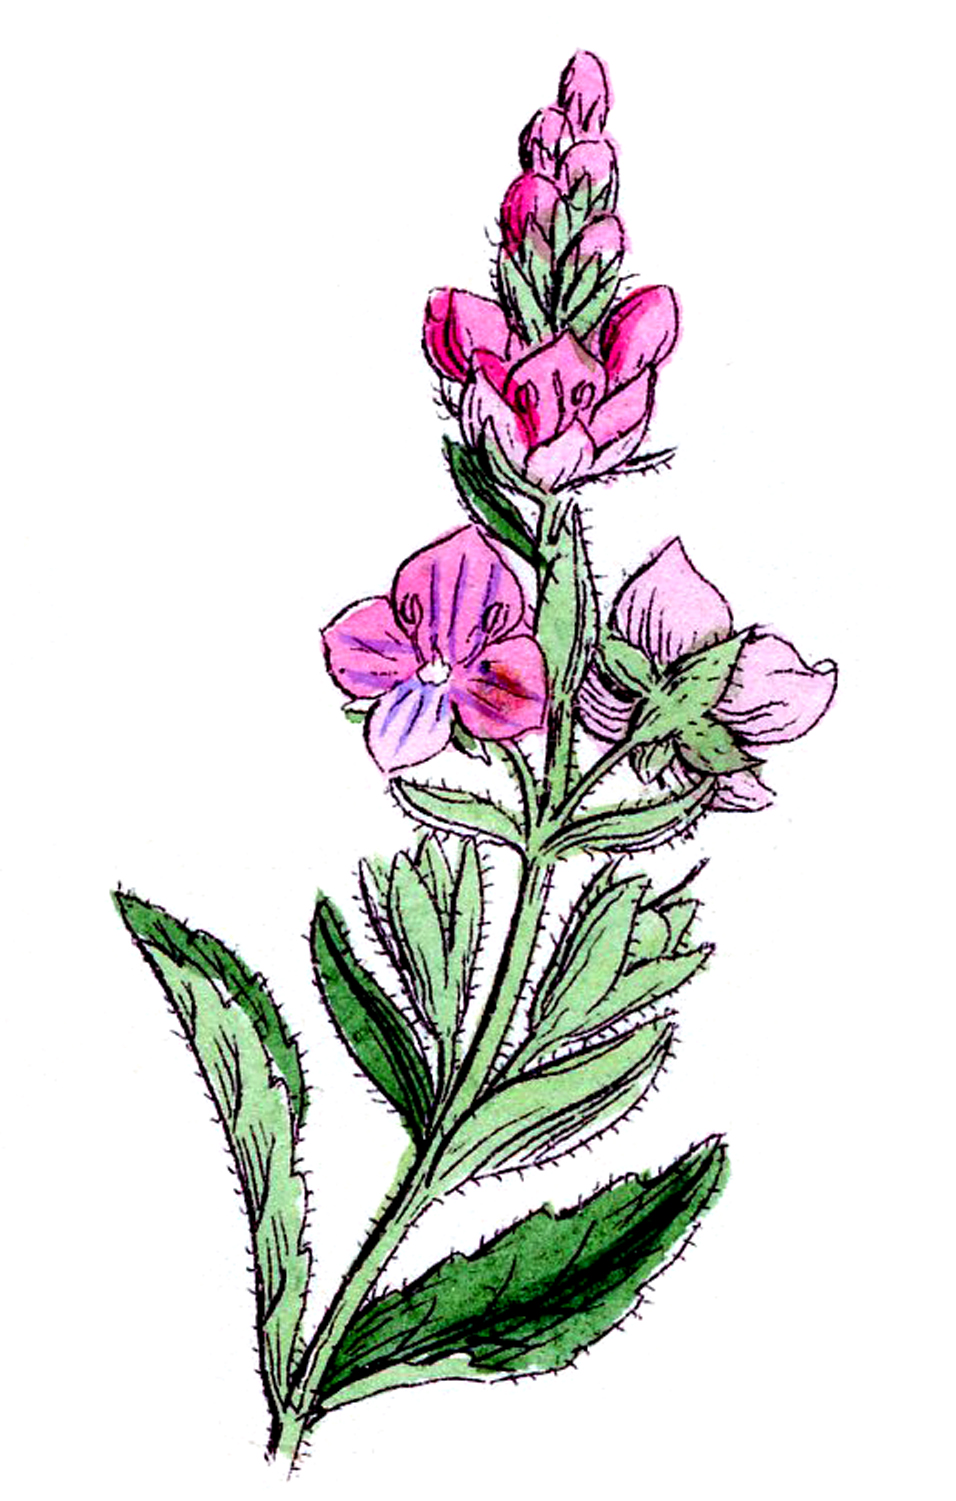 wildflower: an illustration o